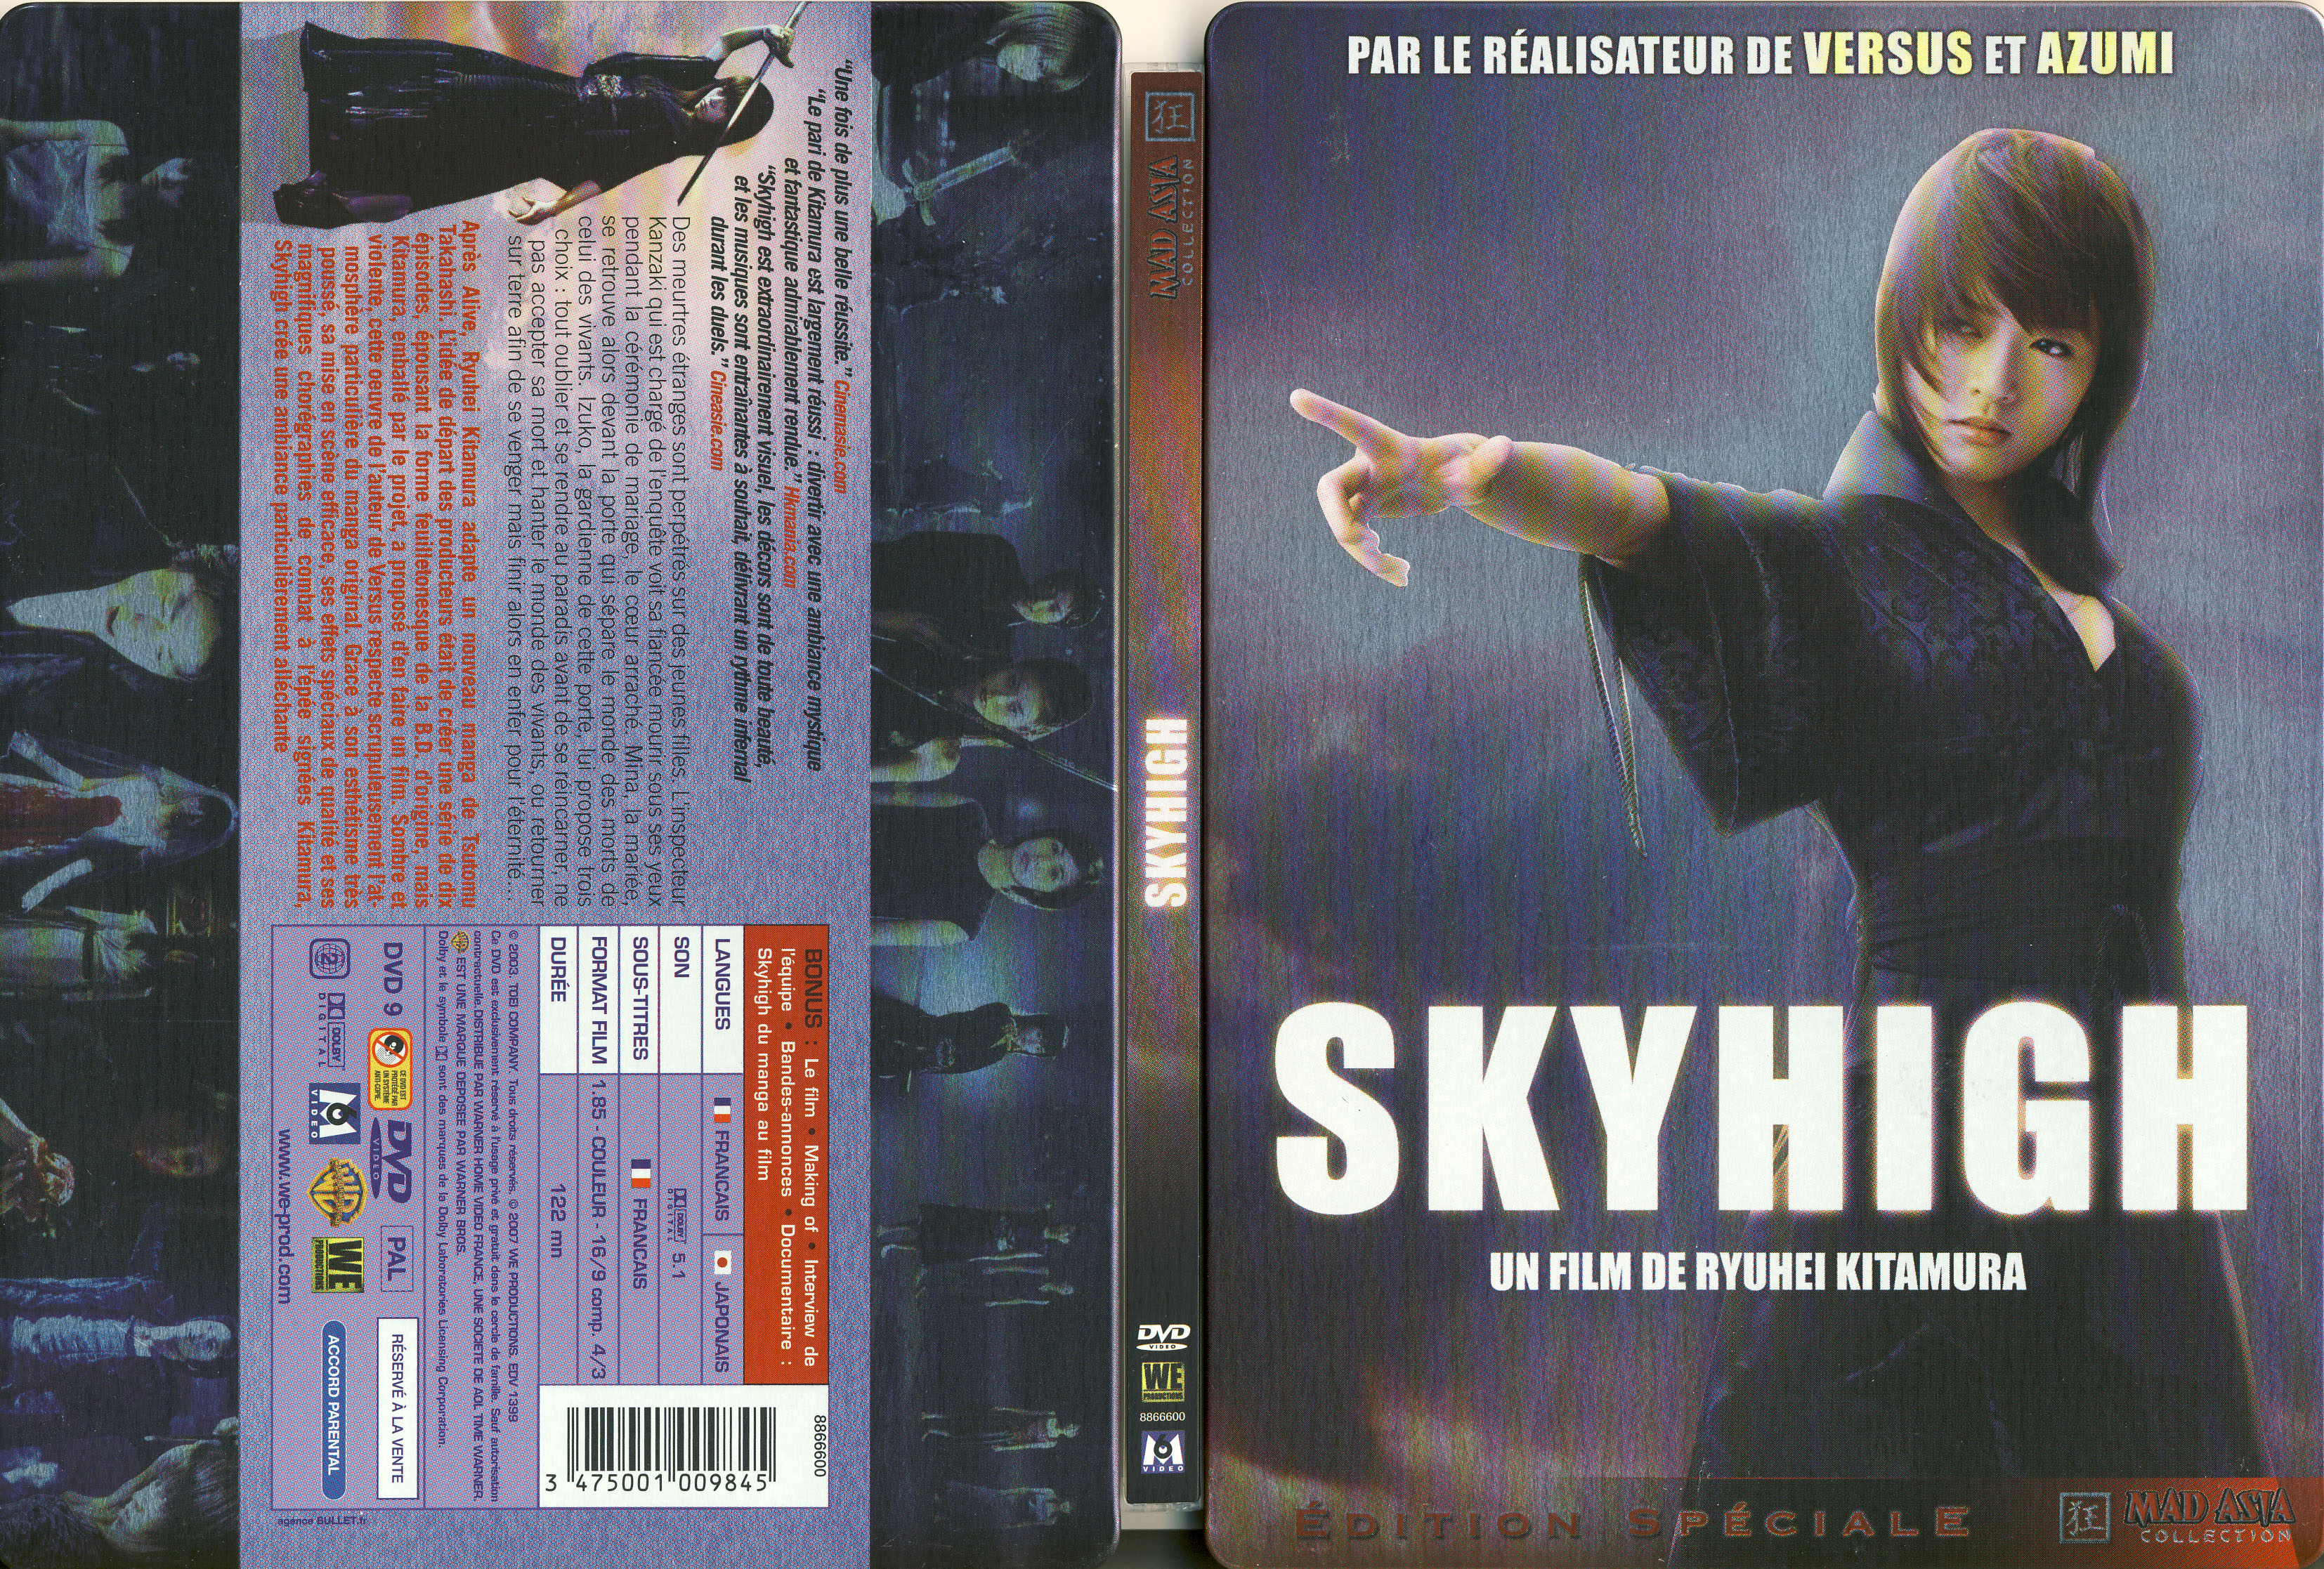 Jaquette DVD Skyhigh v2